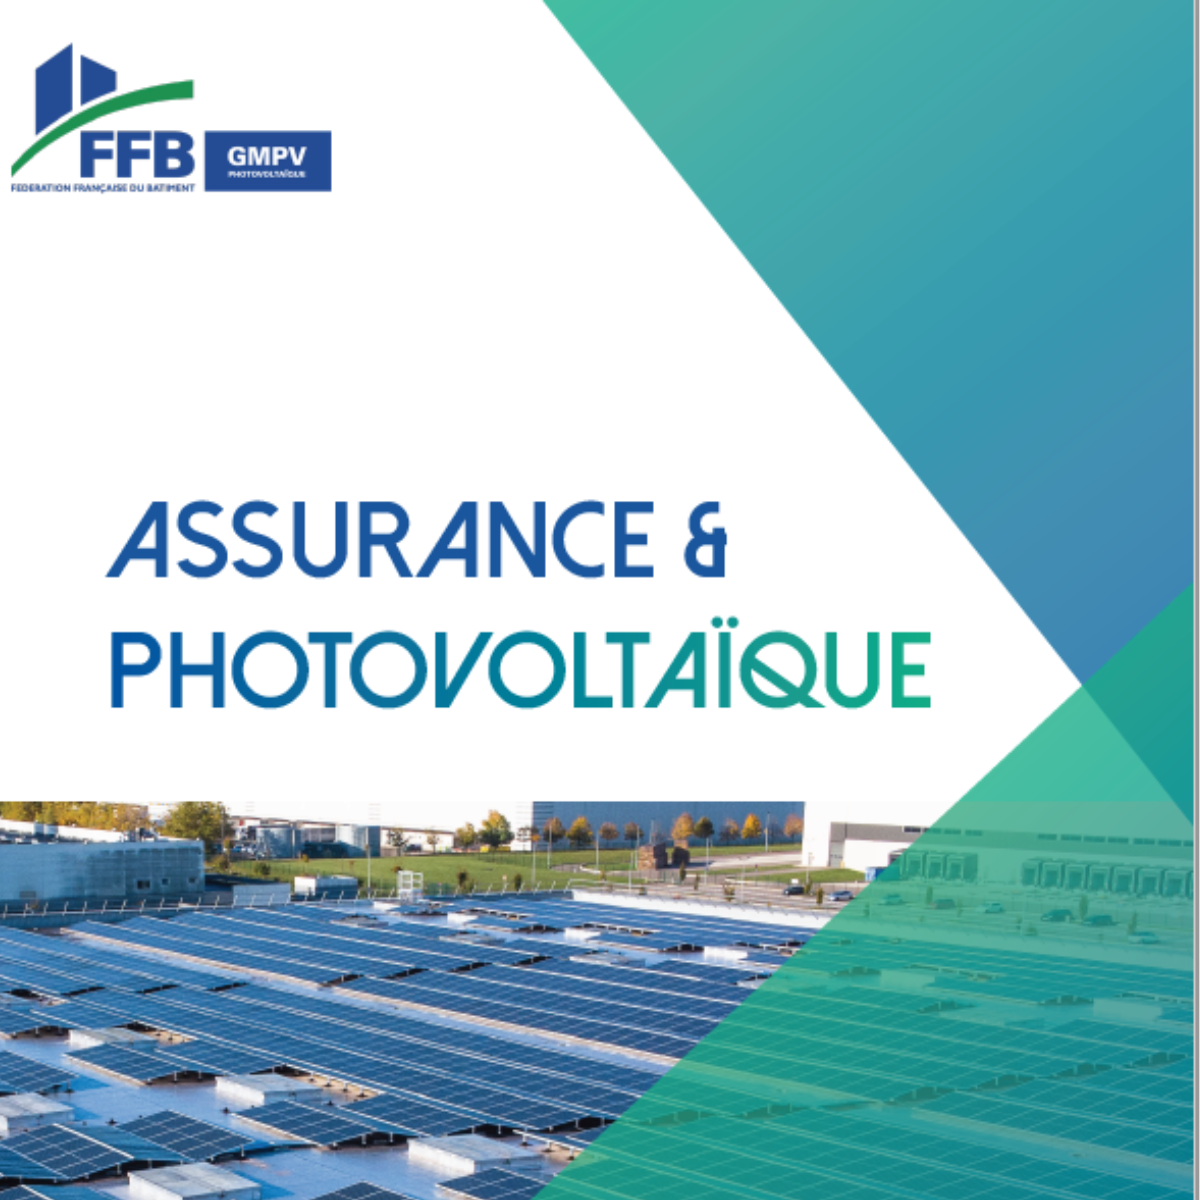 Assurance & Photovoltaïque